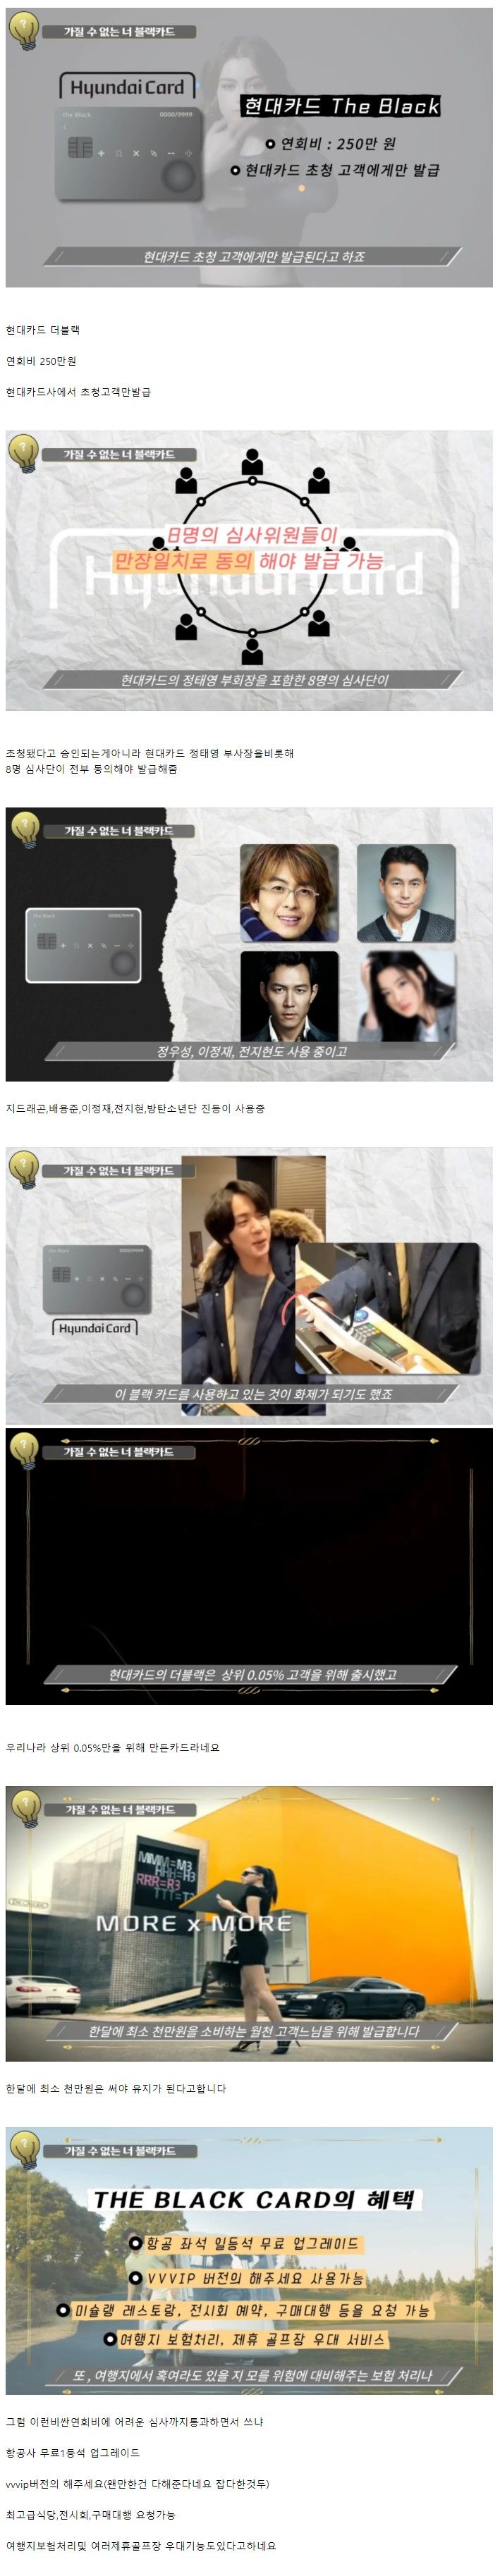 Actor Lee Jung Jae's credit card.jpg